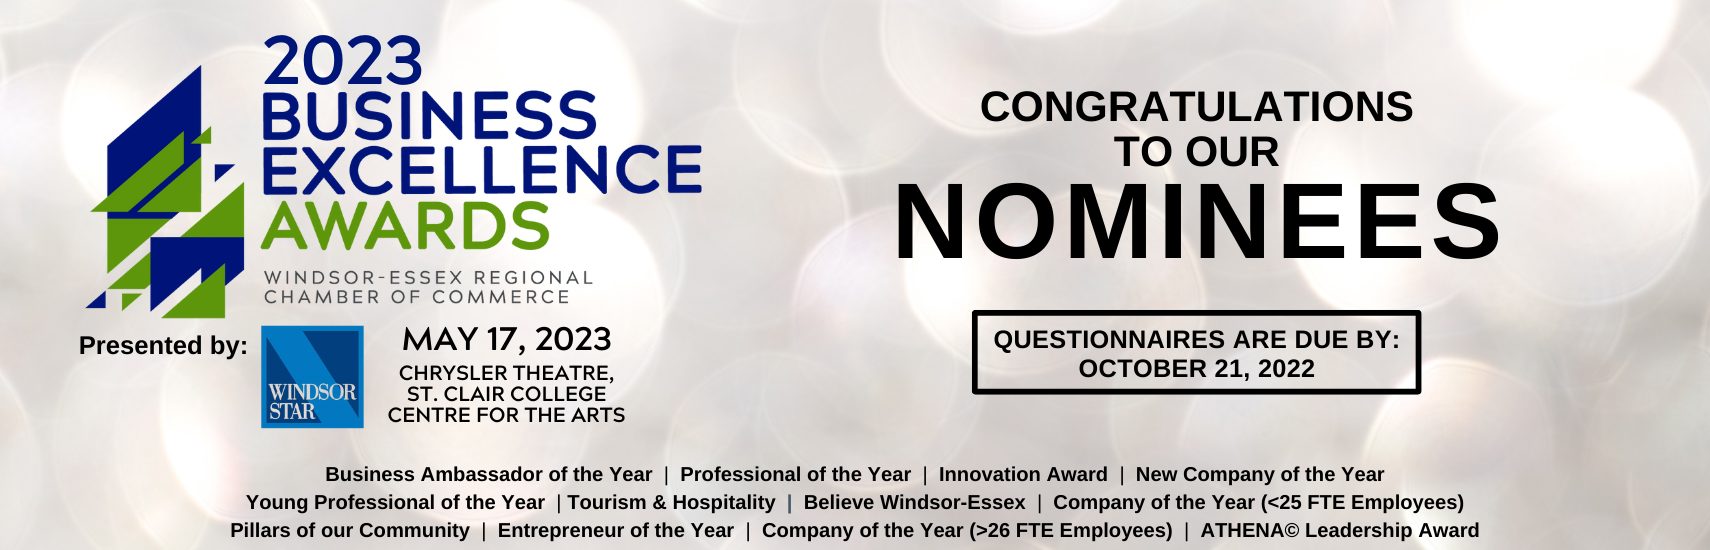 2023 Business Excellence Awards Categories WindsorEssex Reg. Chamber